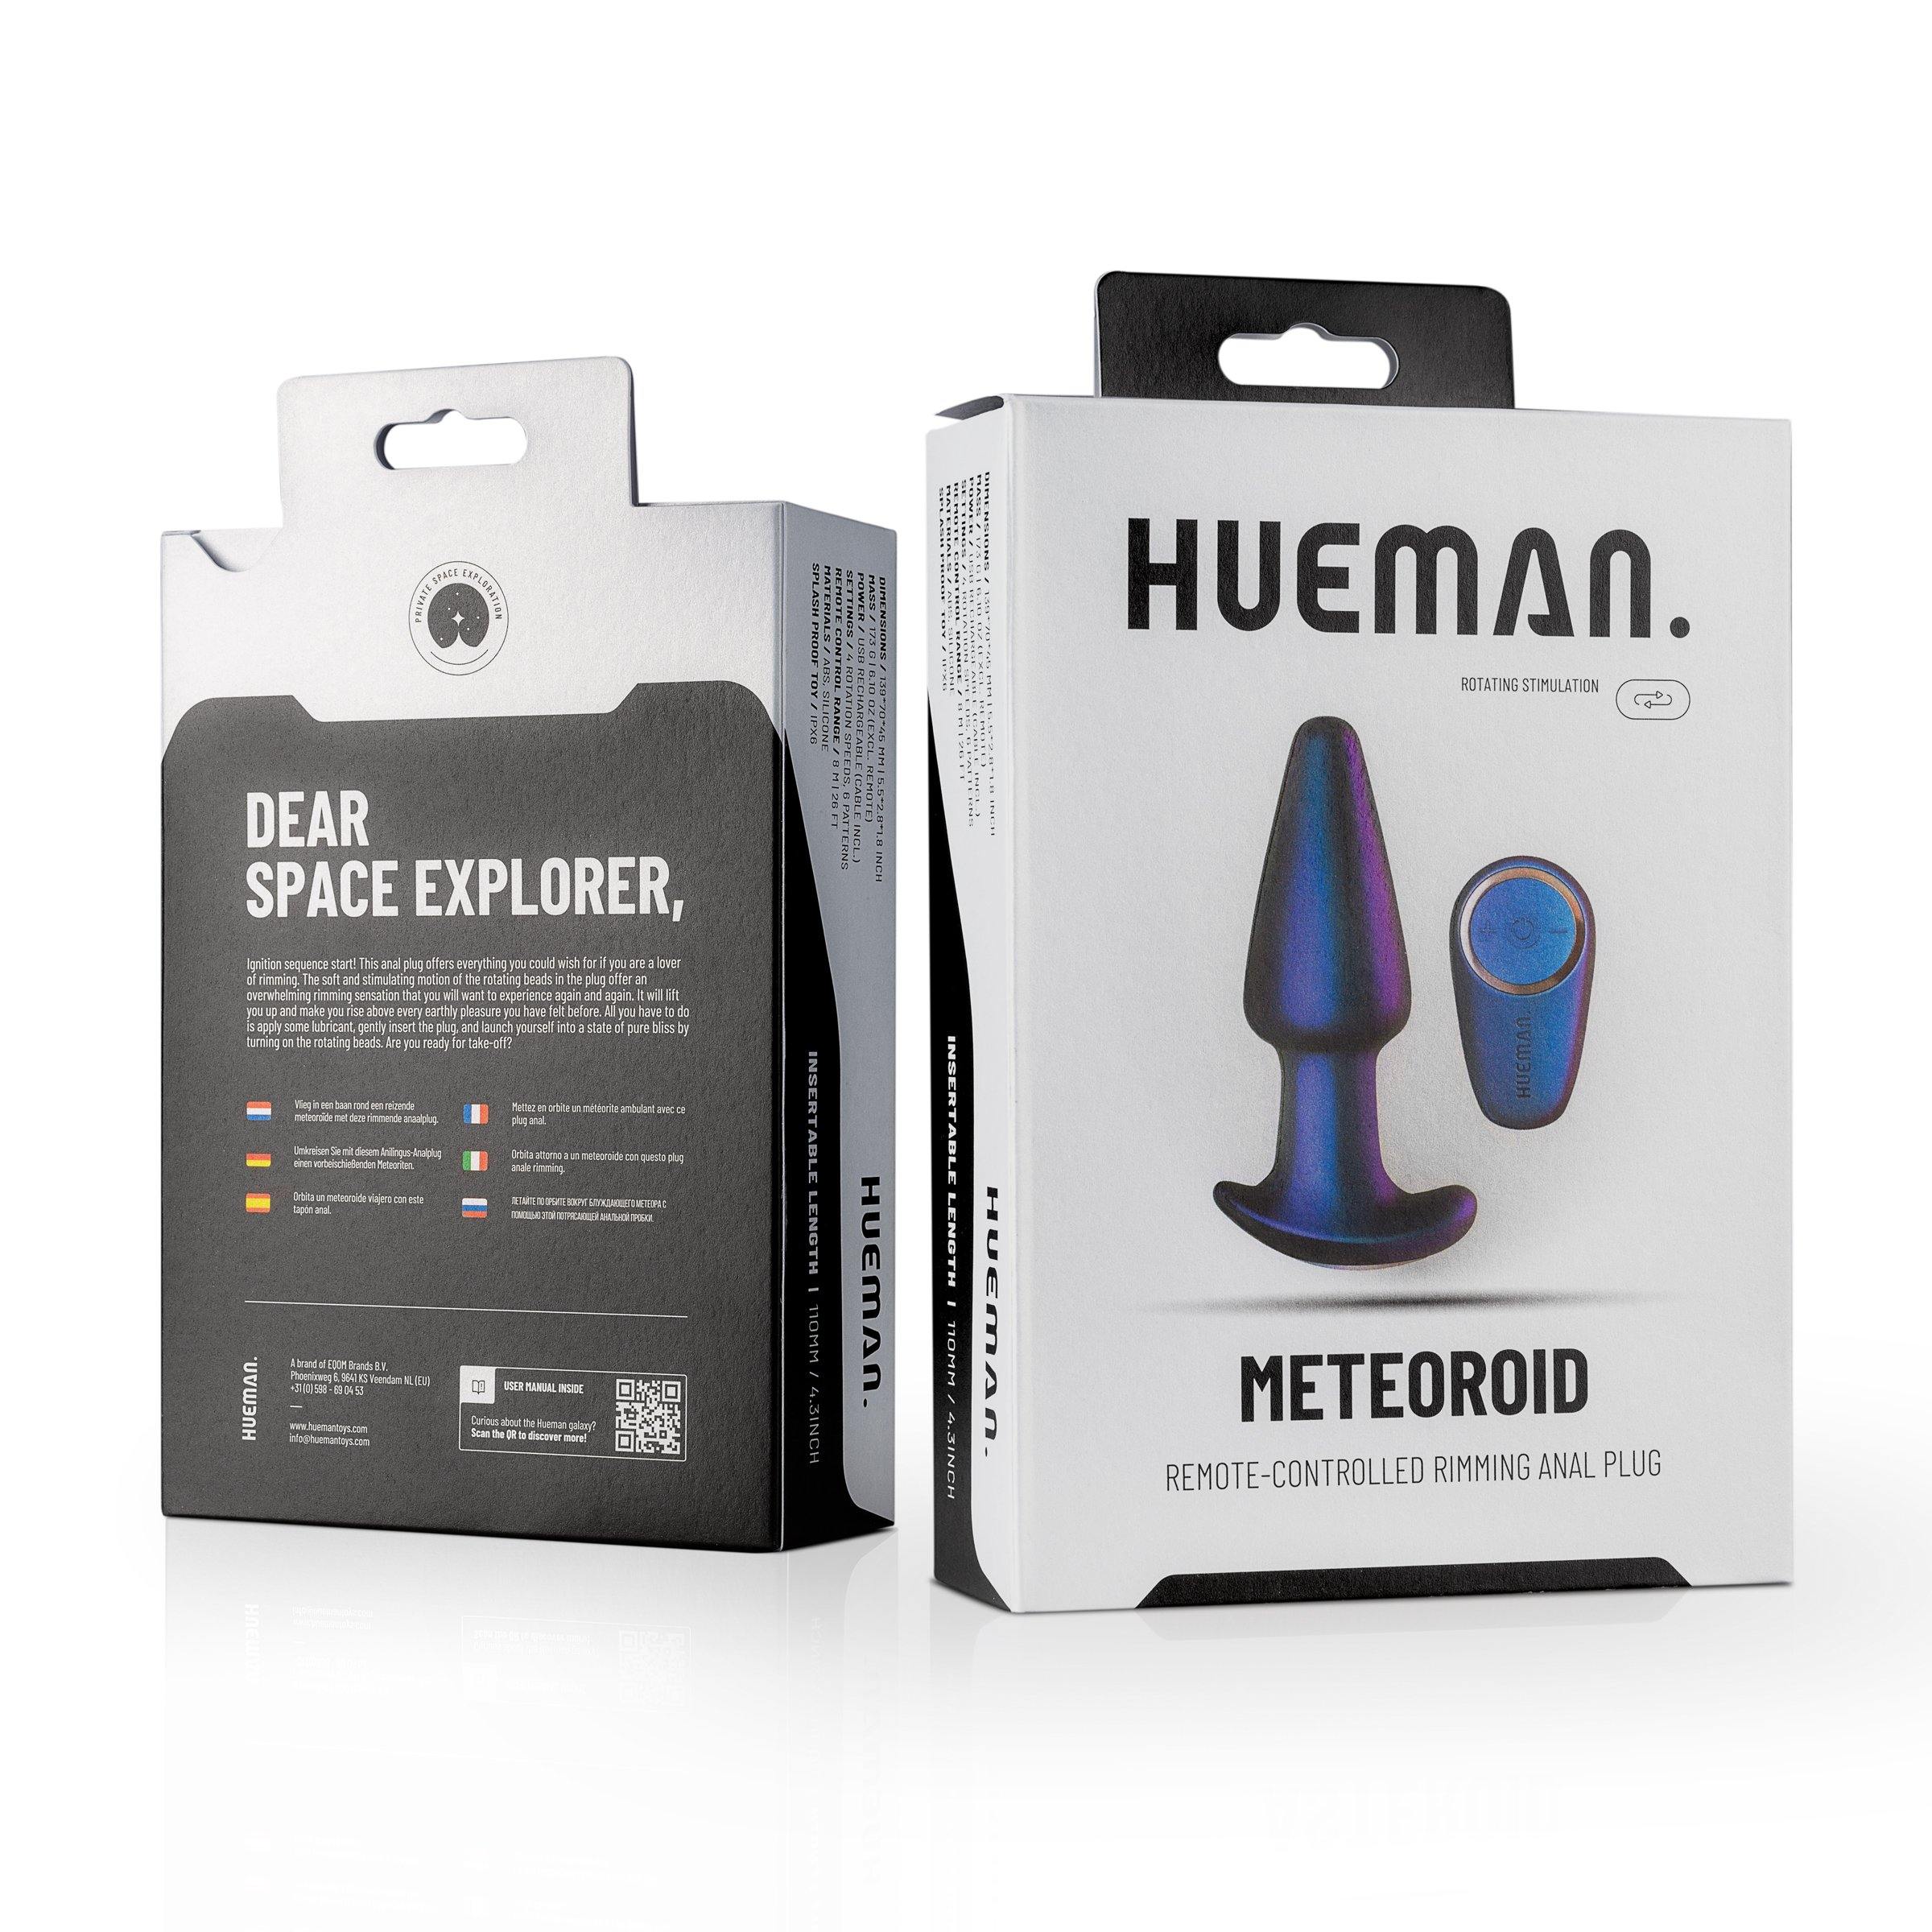 Hueman Meteoroid Rimming Anal Plug - Buy At Luxury Toy X - Free 3-Day Shipping